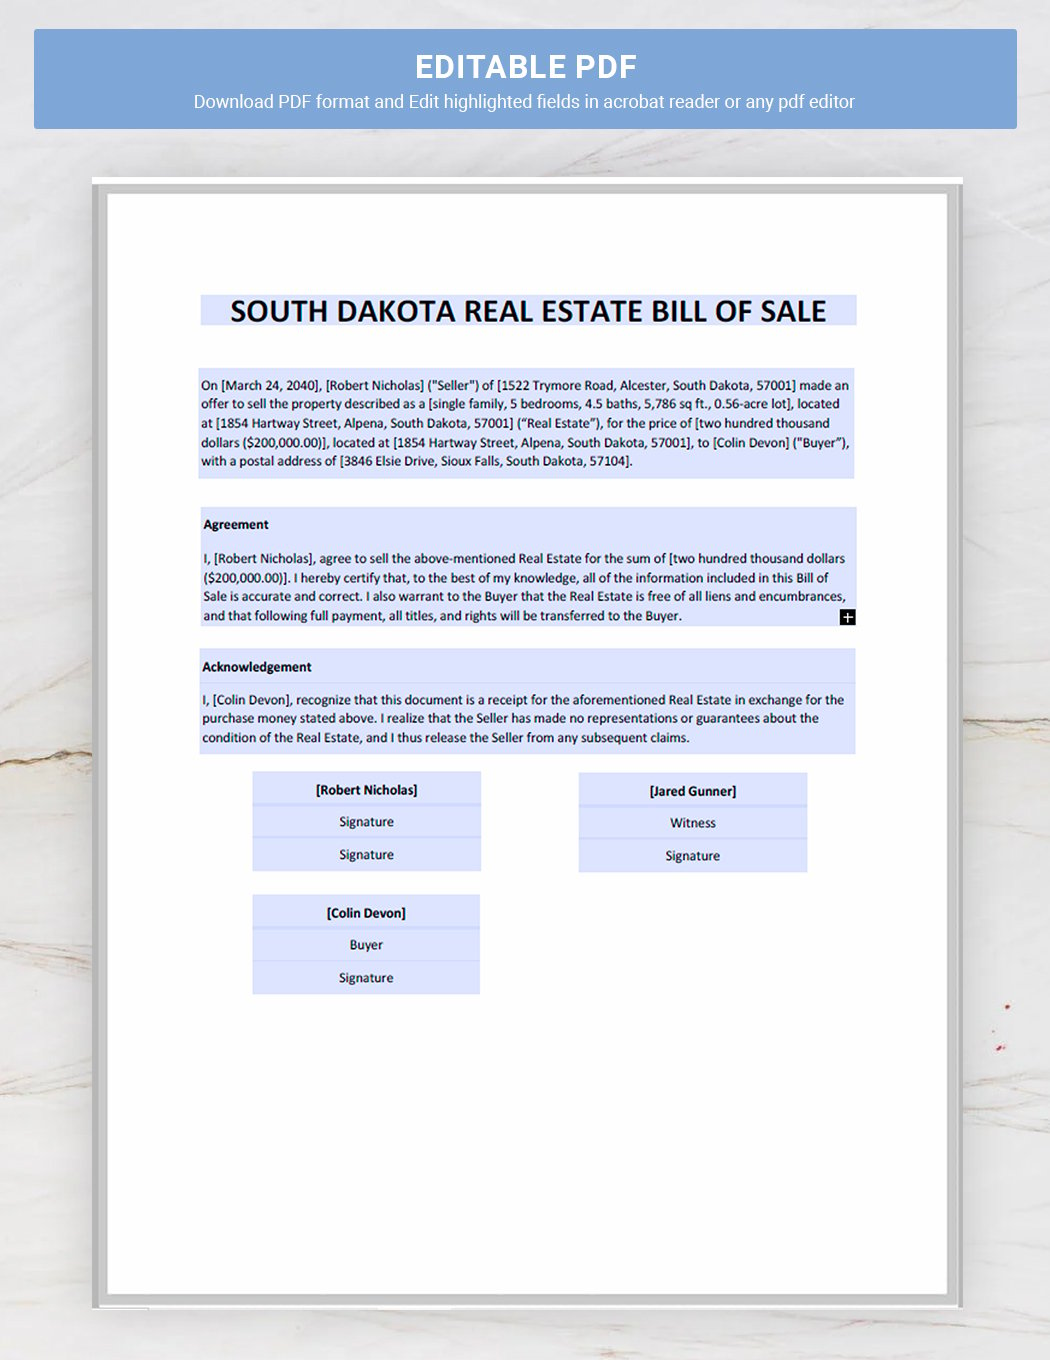 South Dakota Real Estate Bill of Sale Template in Word PDF Google